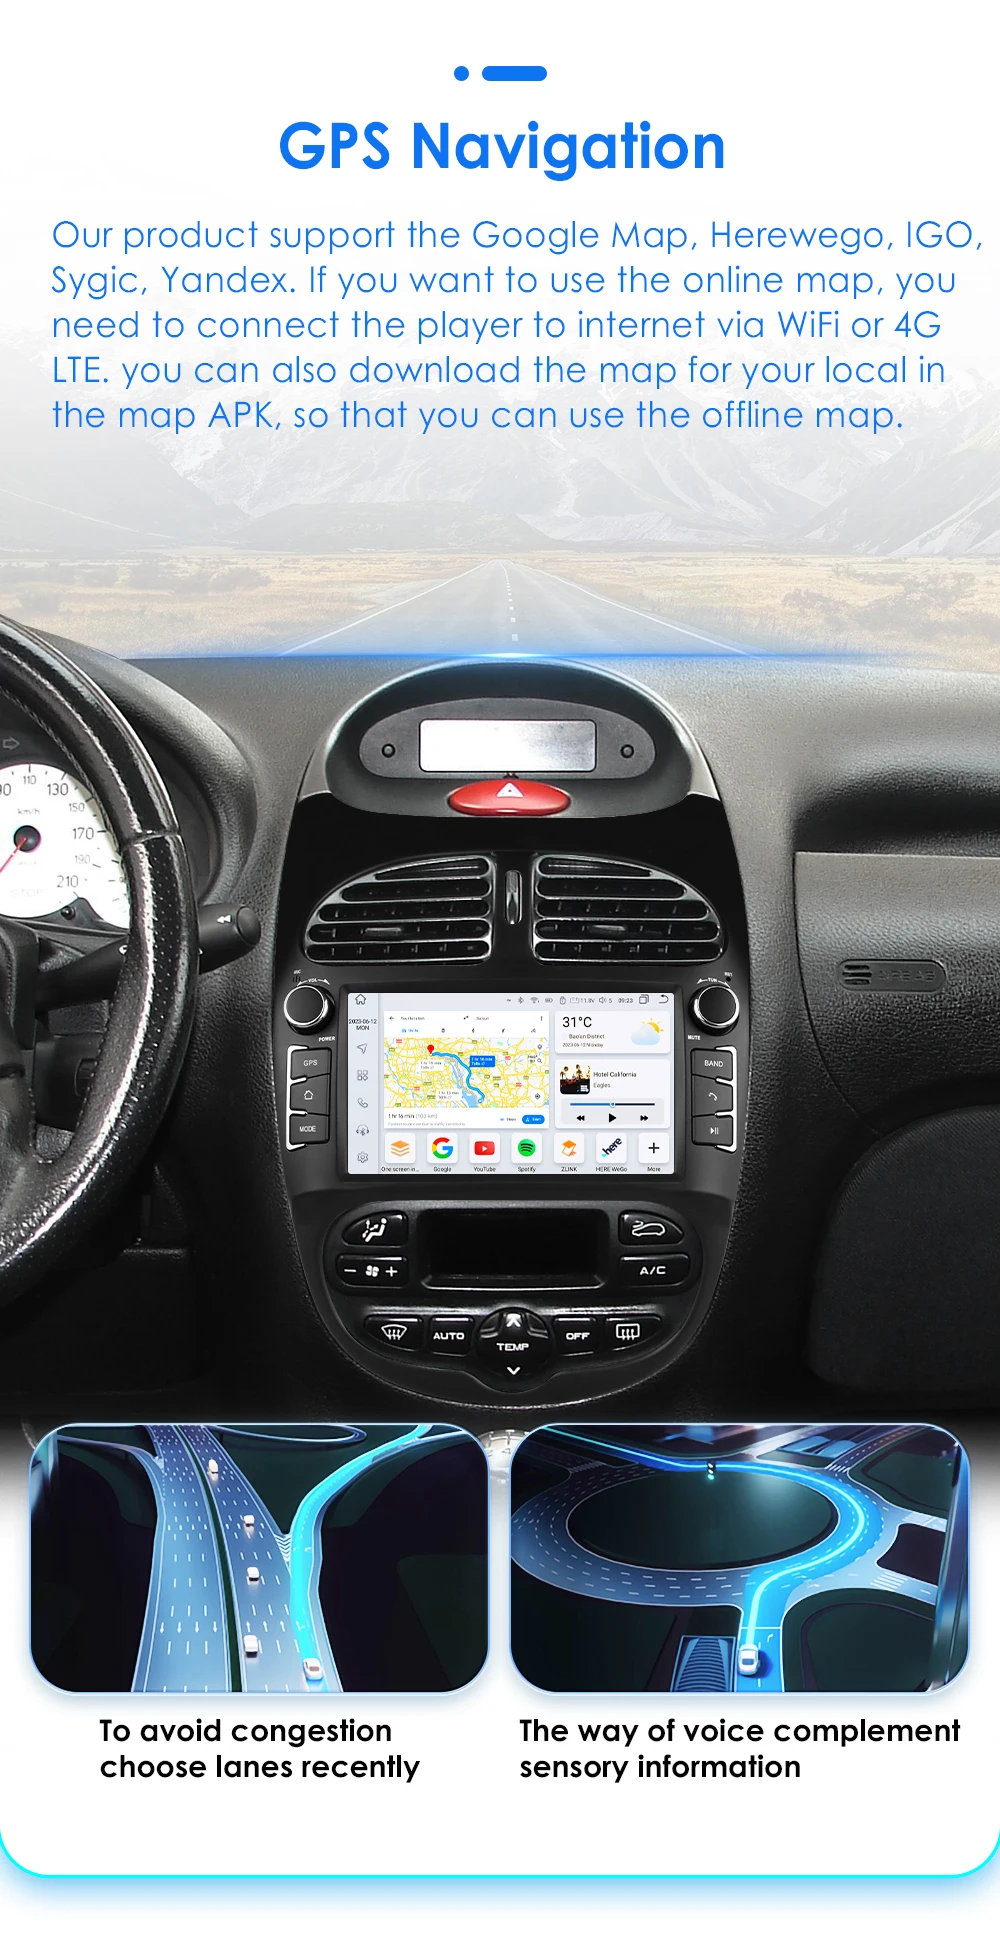 JVC AUTO RADIO für Peugeot 206 Autoradio Android 4x50Watt KFZ